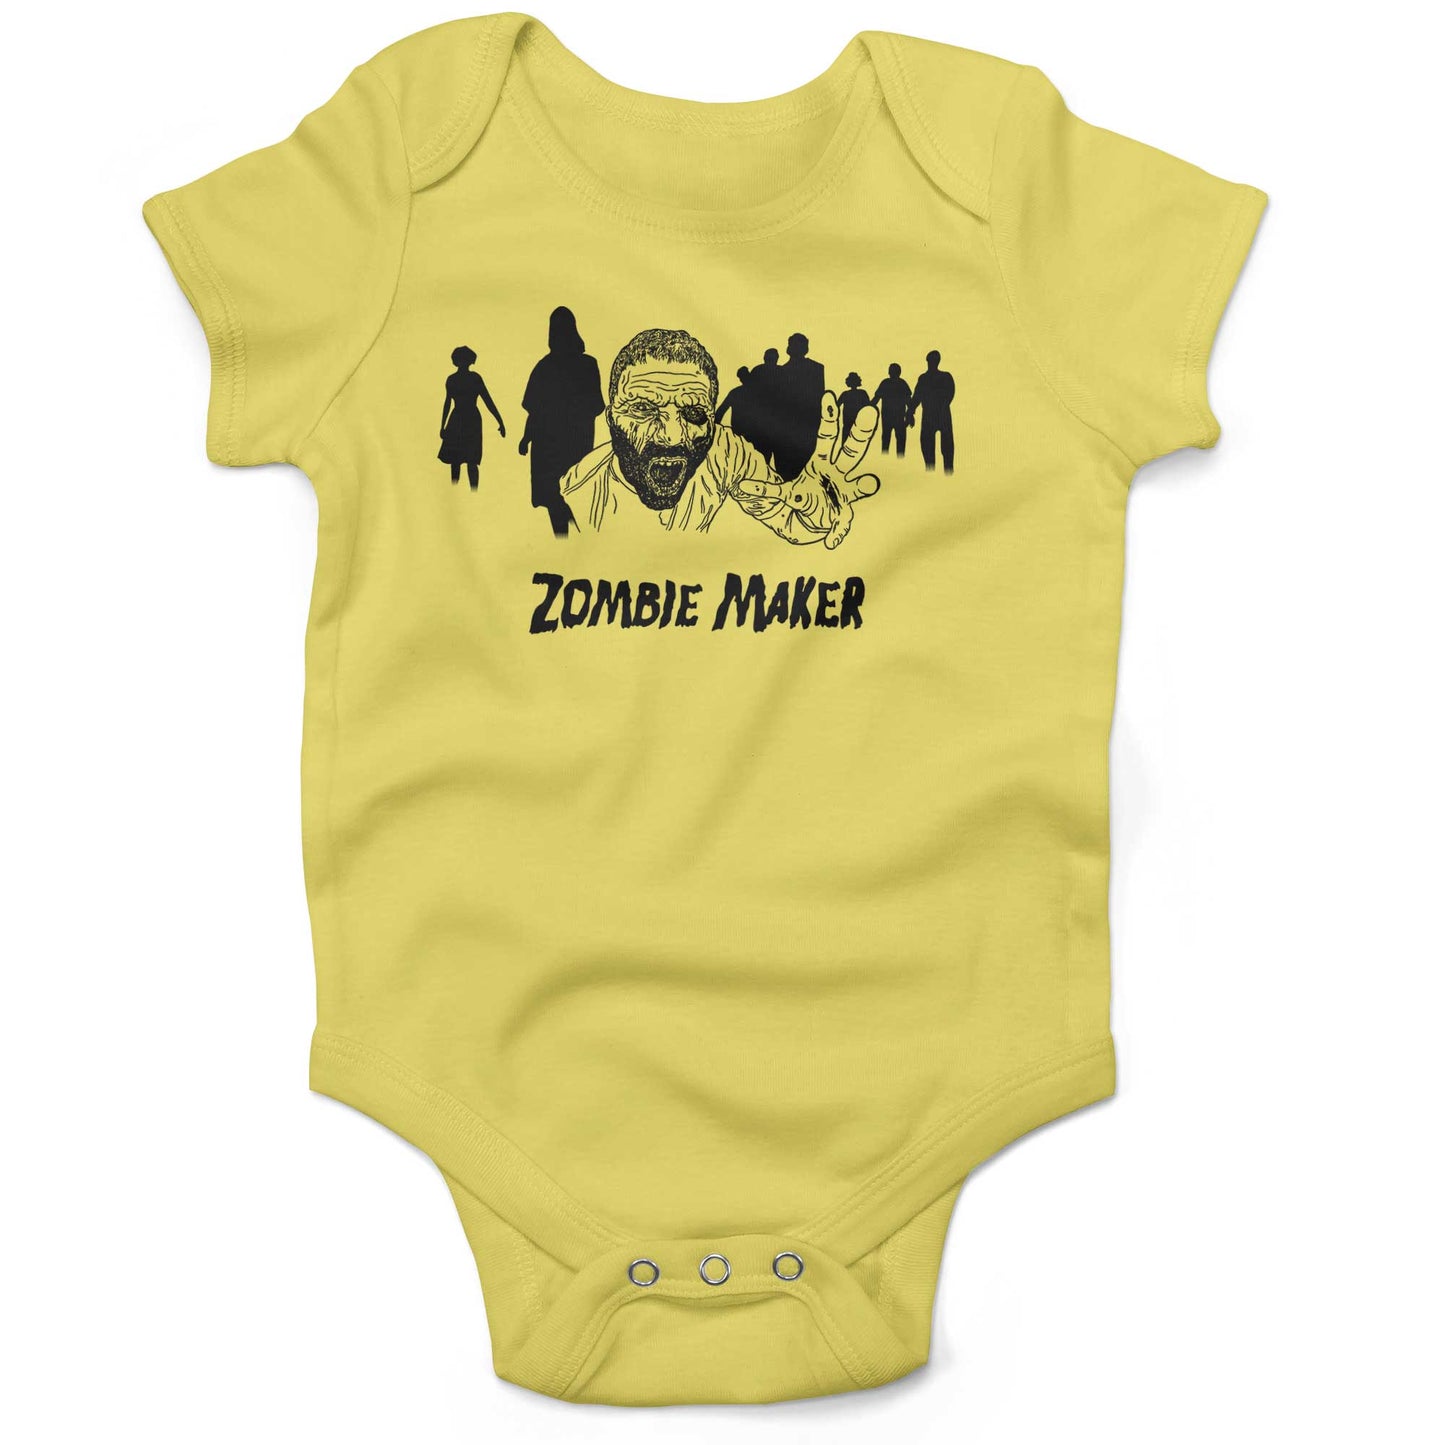 Zombie Maker Infant Bodysuit or Raglan Baby Tee-Yellow-3-6 months